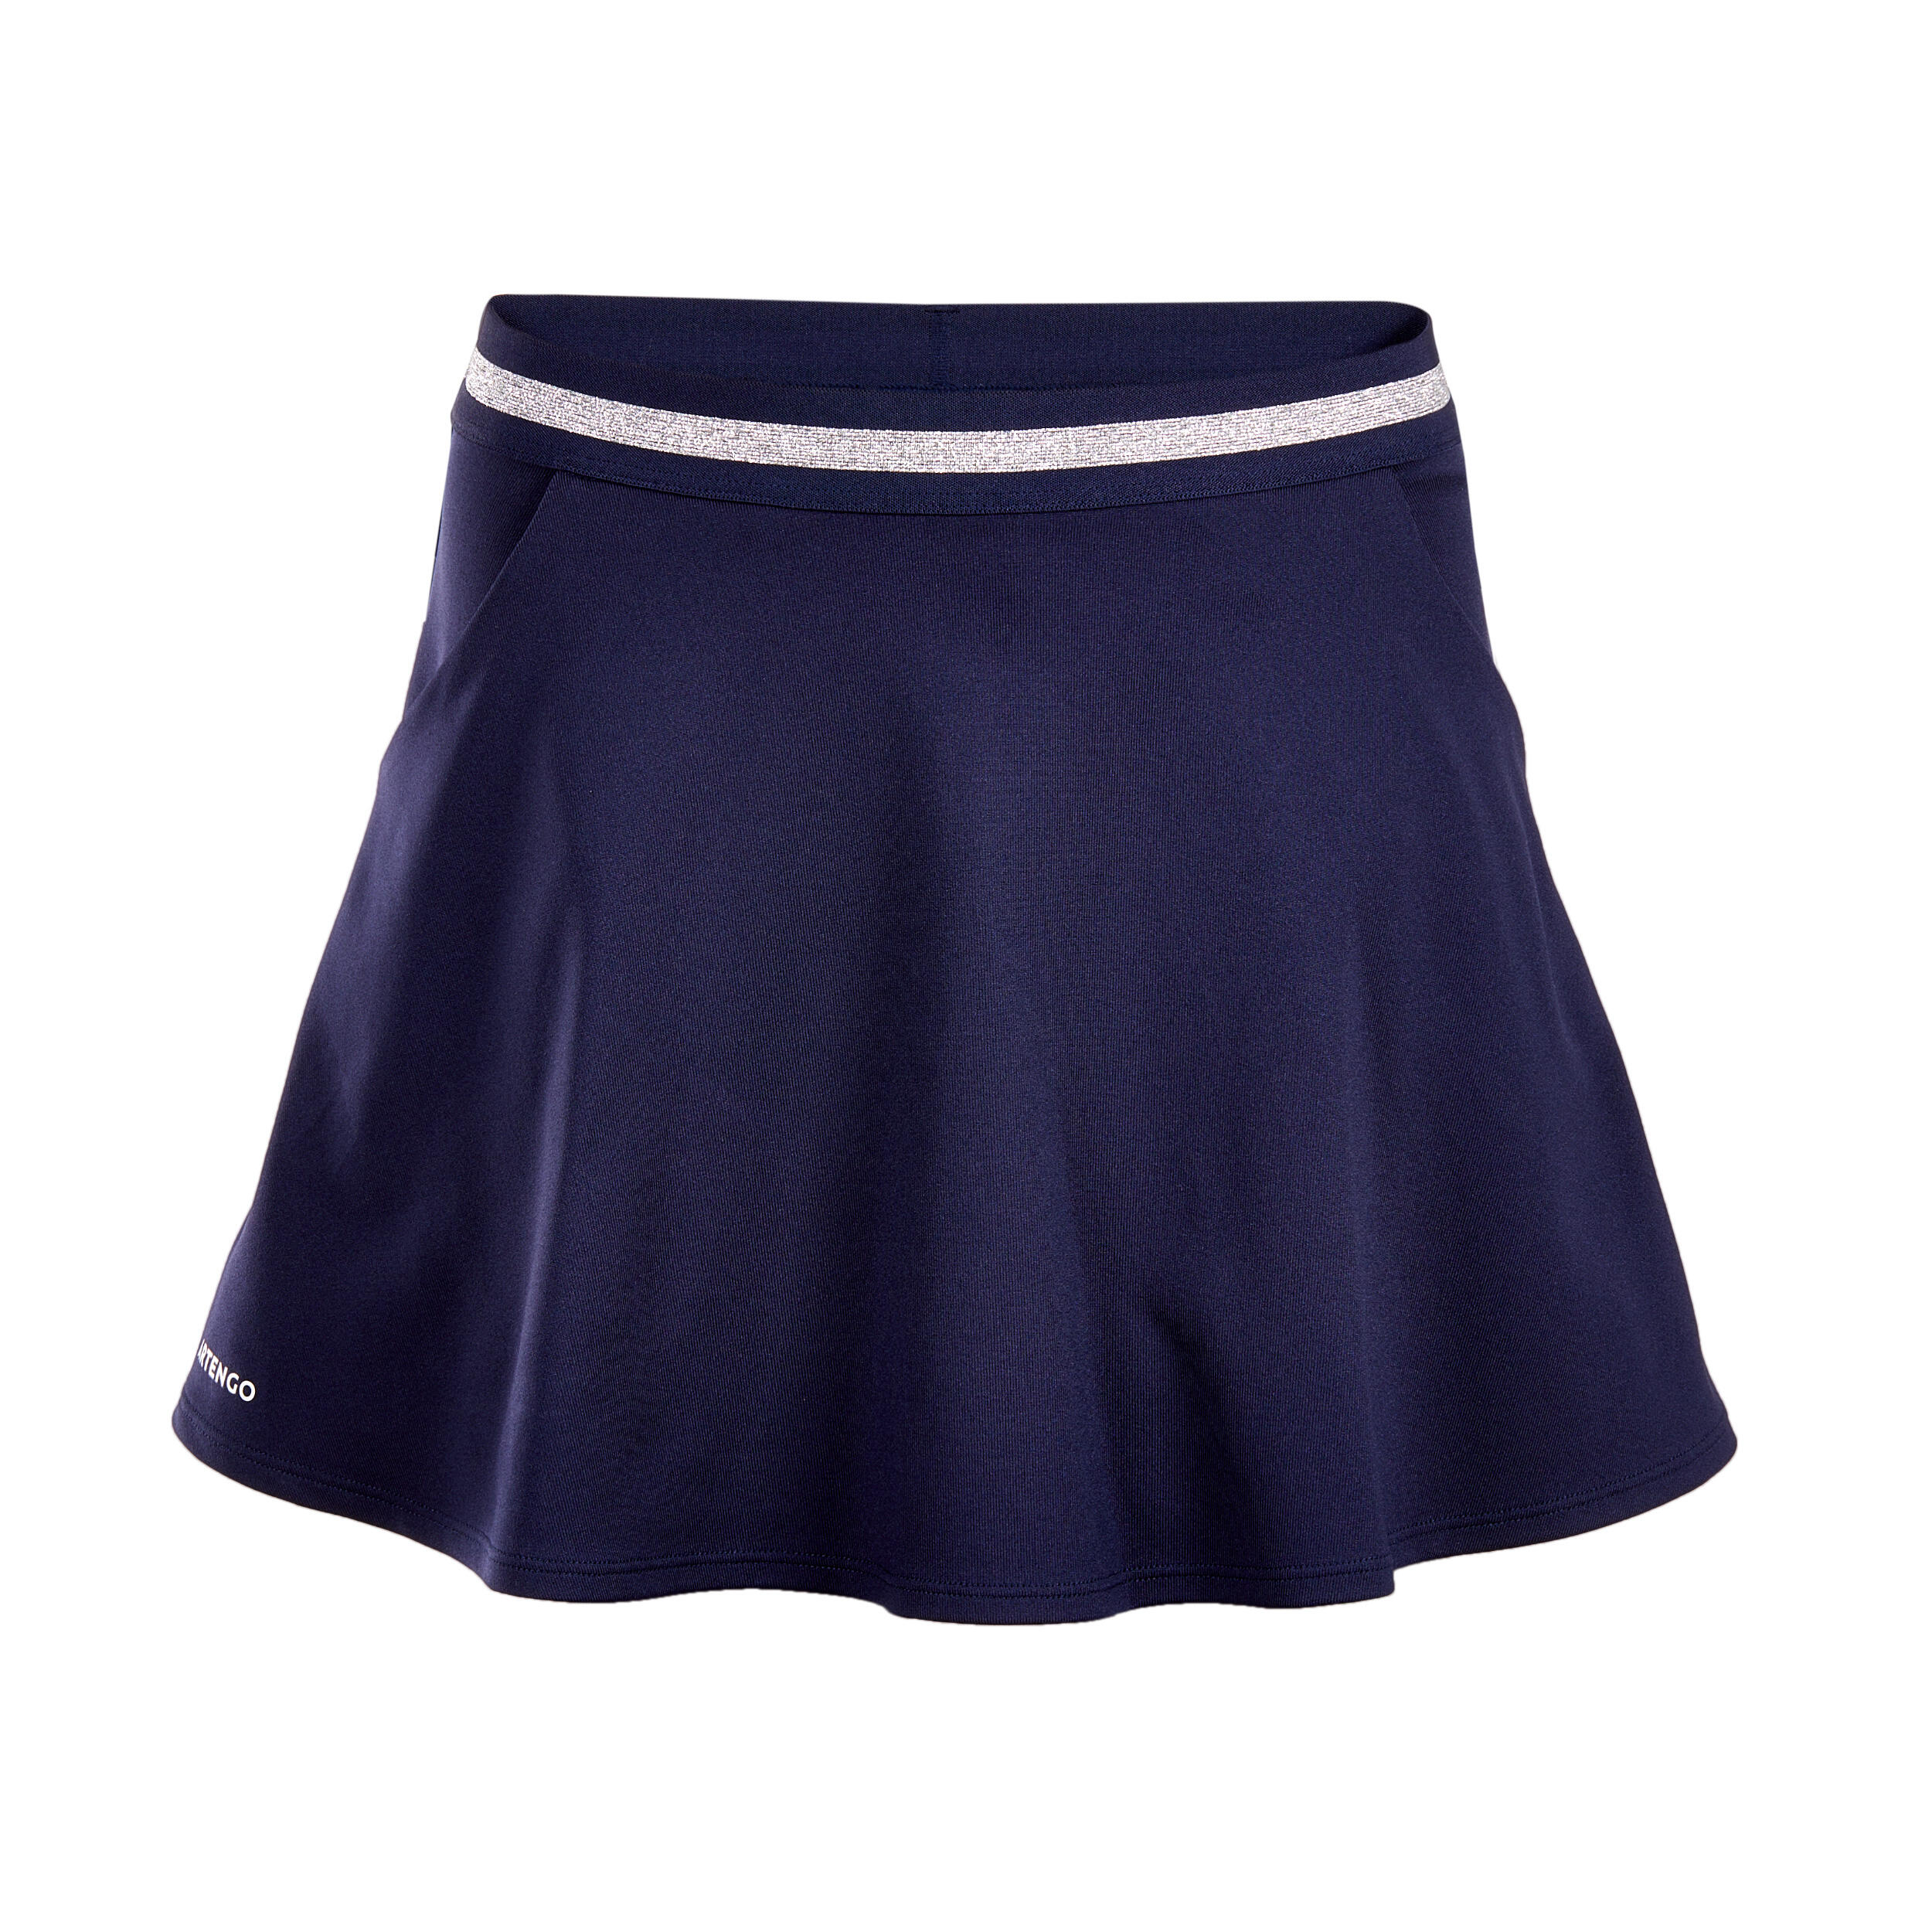 Girls' Tennis Skirt Dry - Navy 8/9